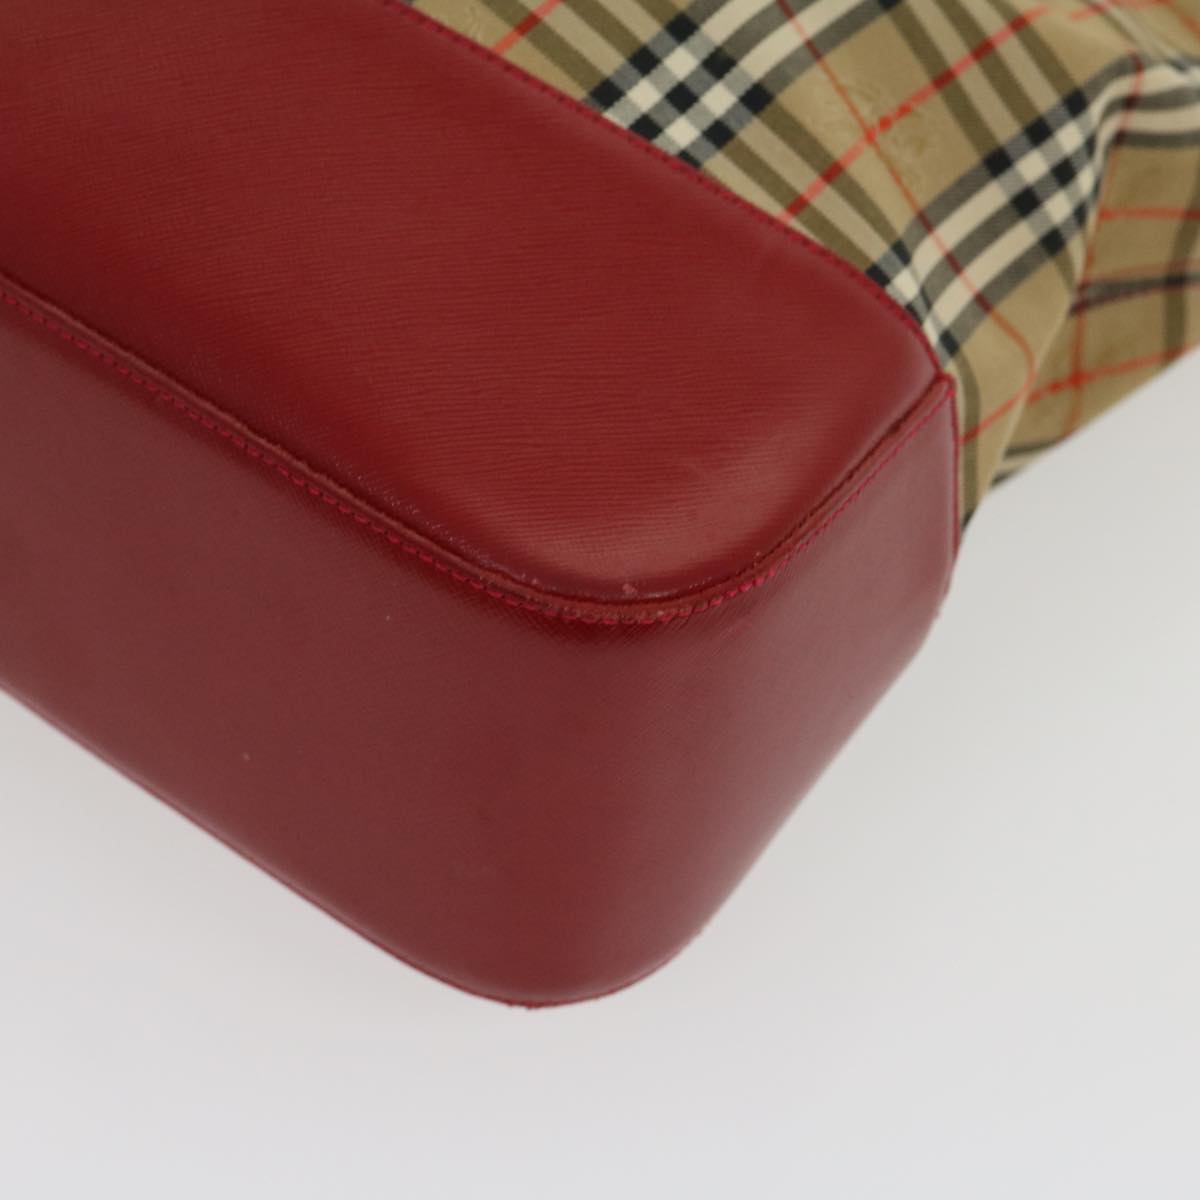 Burberrys Nova Check Shoulder Bag Canvas Brown Red Auth 30331